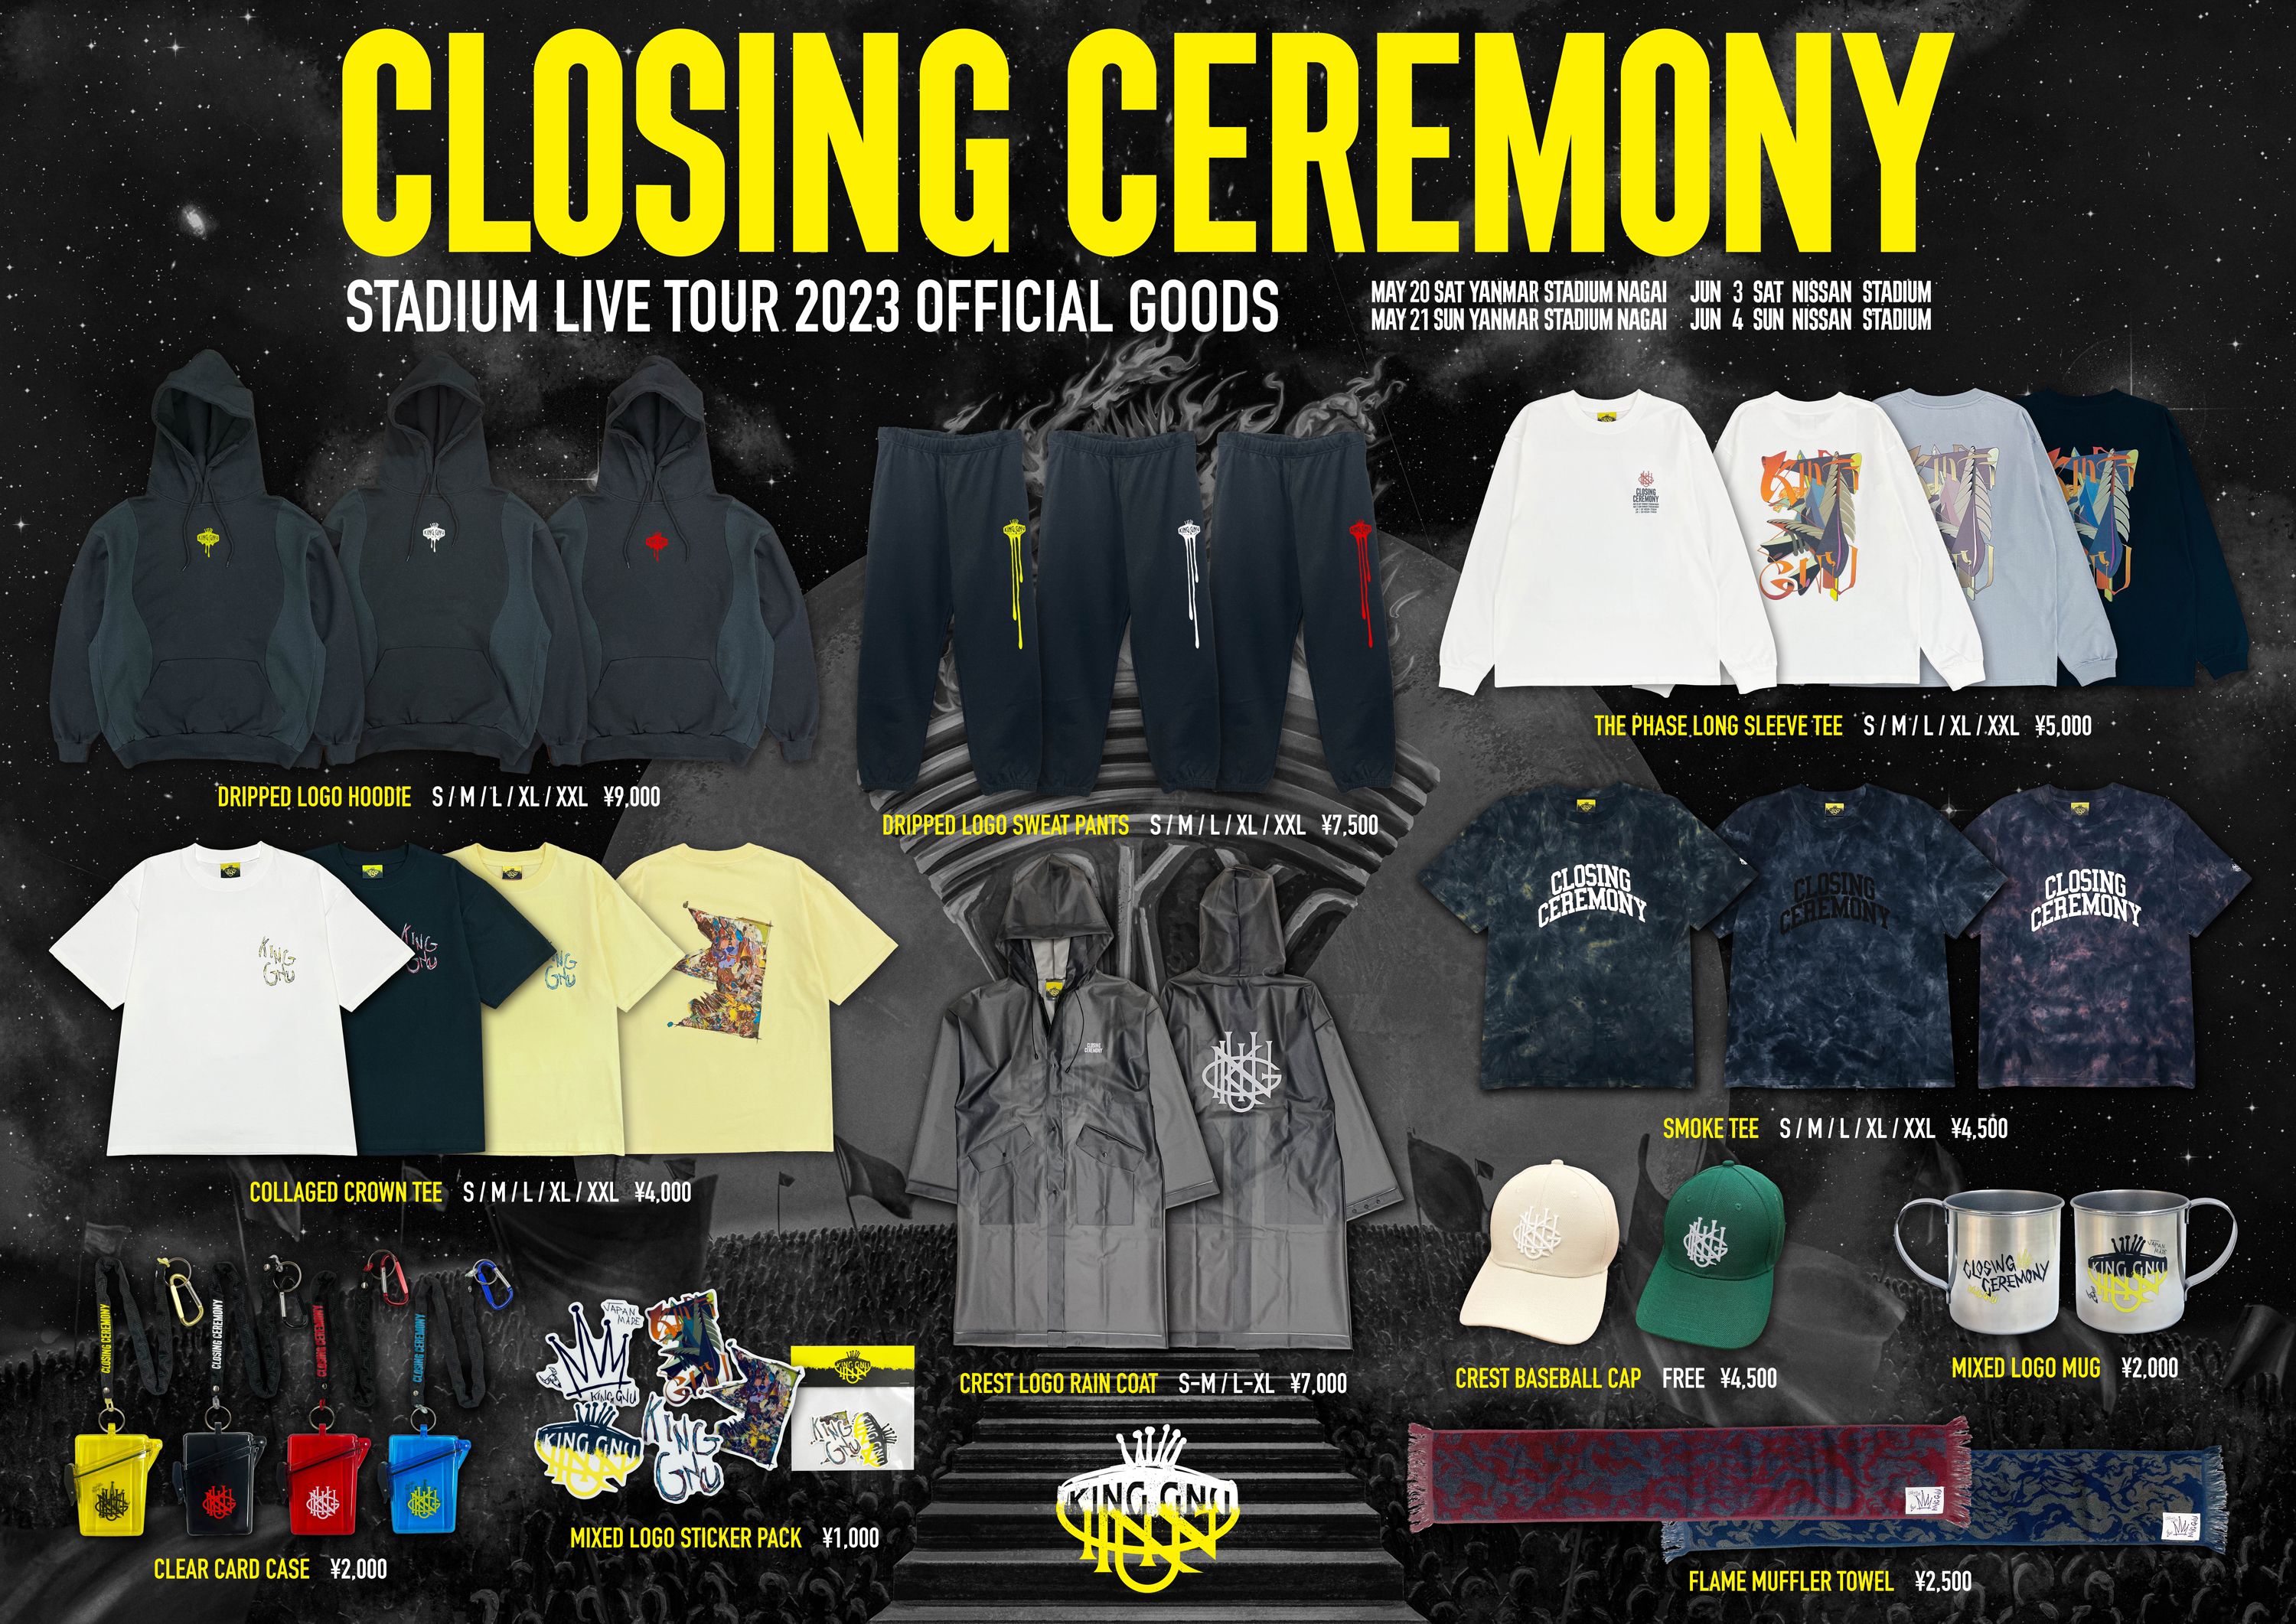 King Gnu Stadium Live Tour 2023 CLOSING CEREMONY」オフィシャル